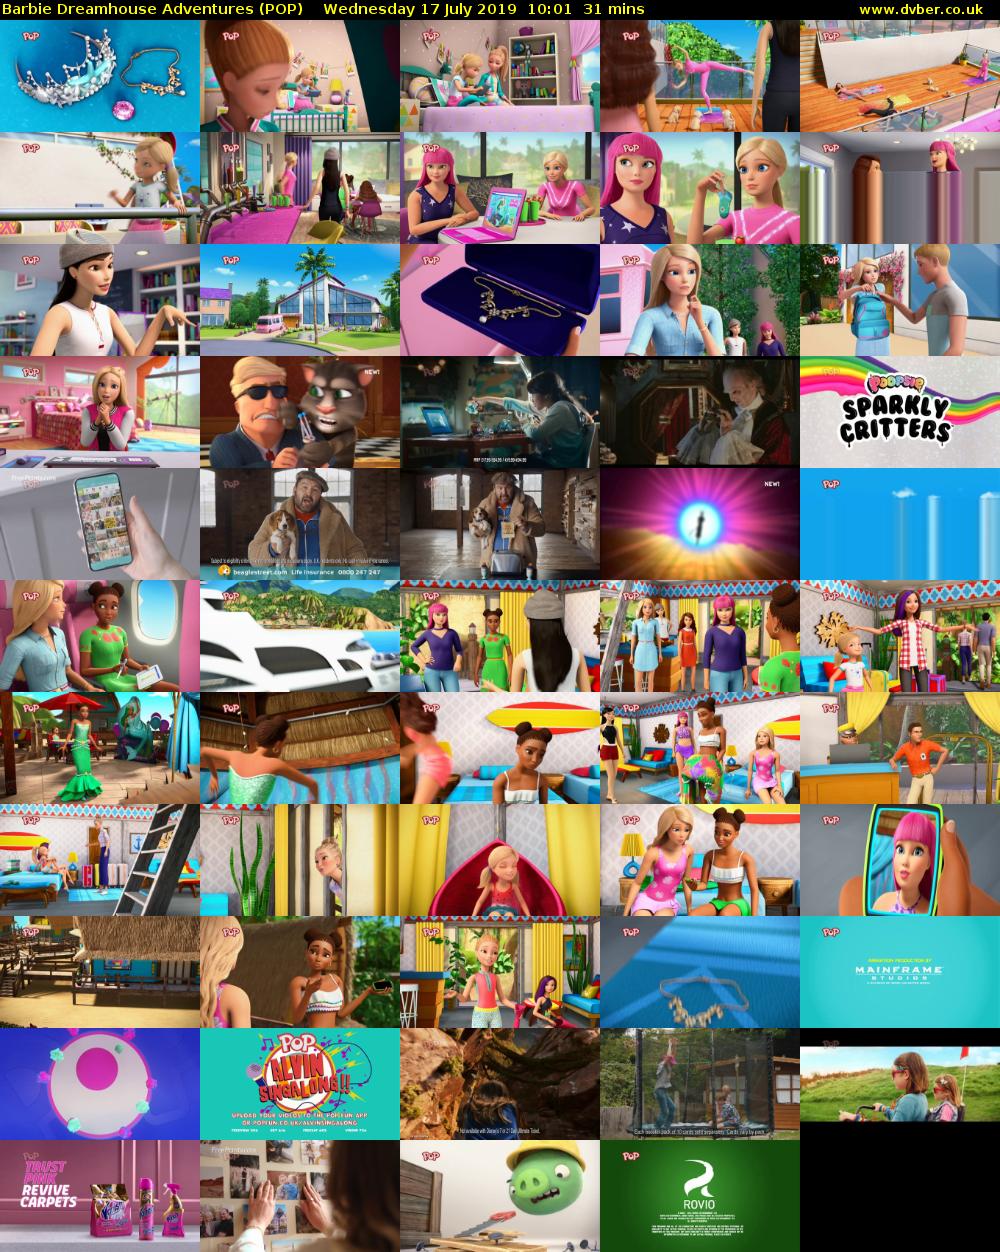 Barbie Dreamhouse Adventures (POP) Wednesday 17 July 2019 10:01 - 10:32